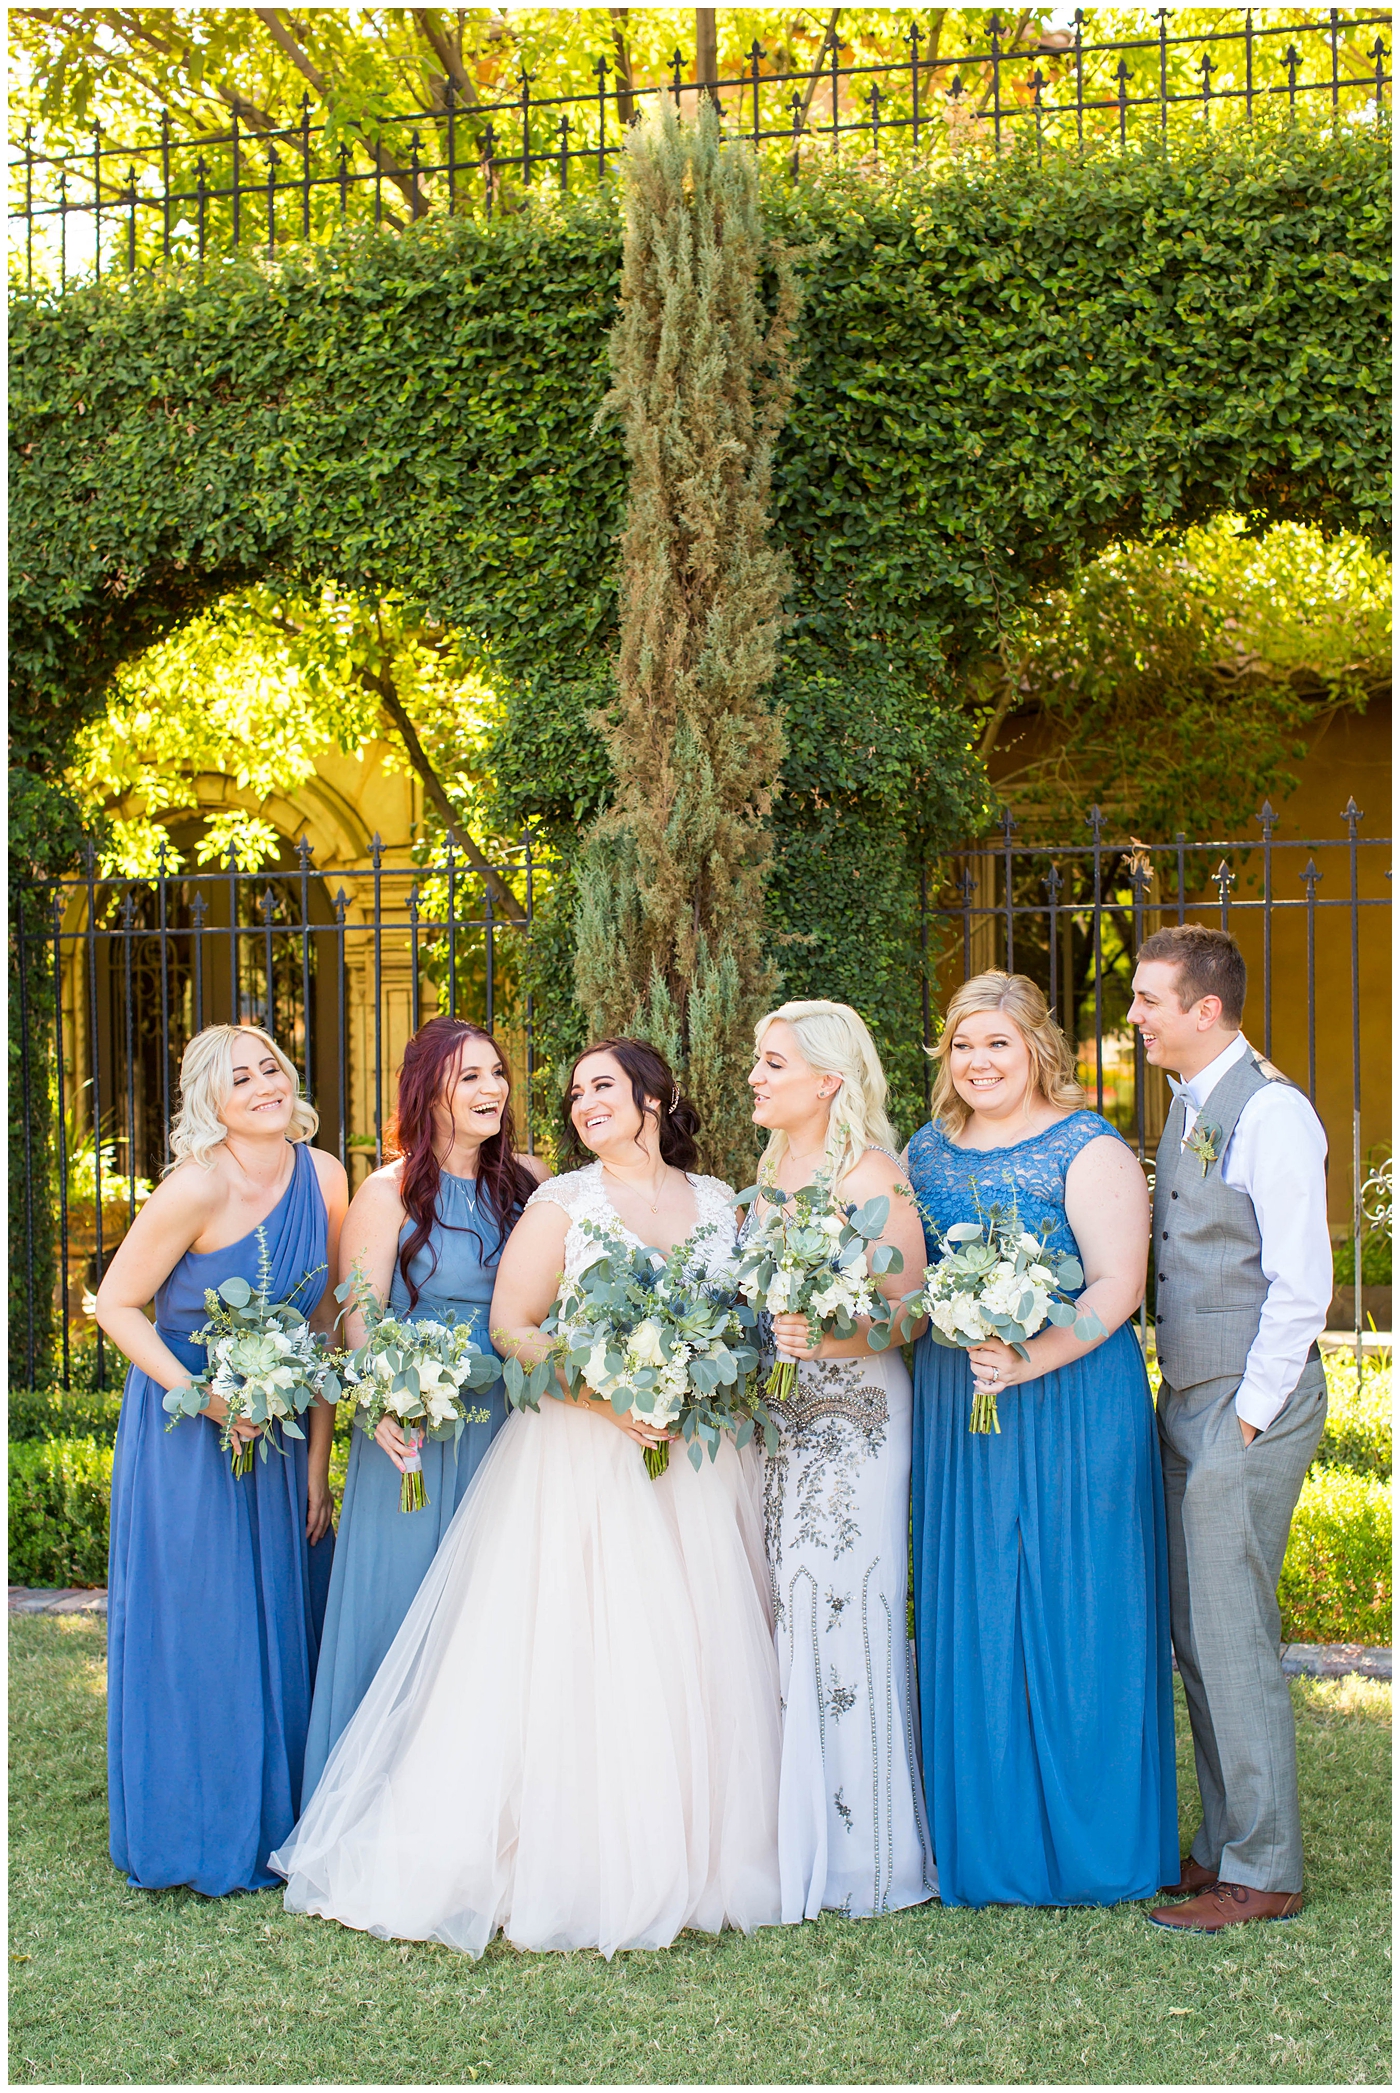 Bridesmaids and bridesman in gray and blue